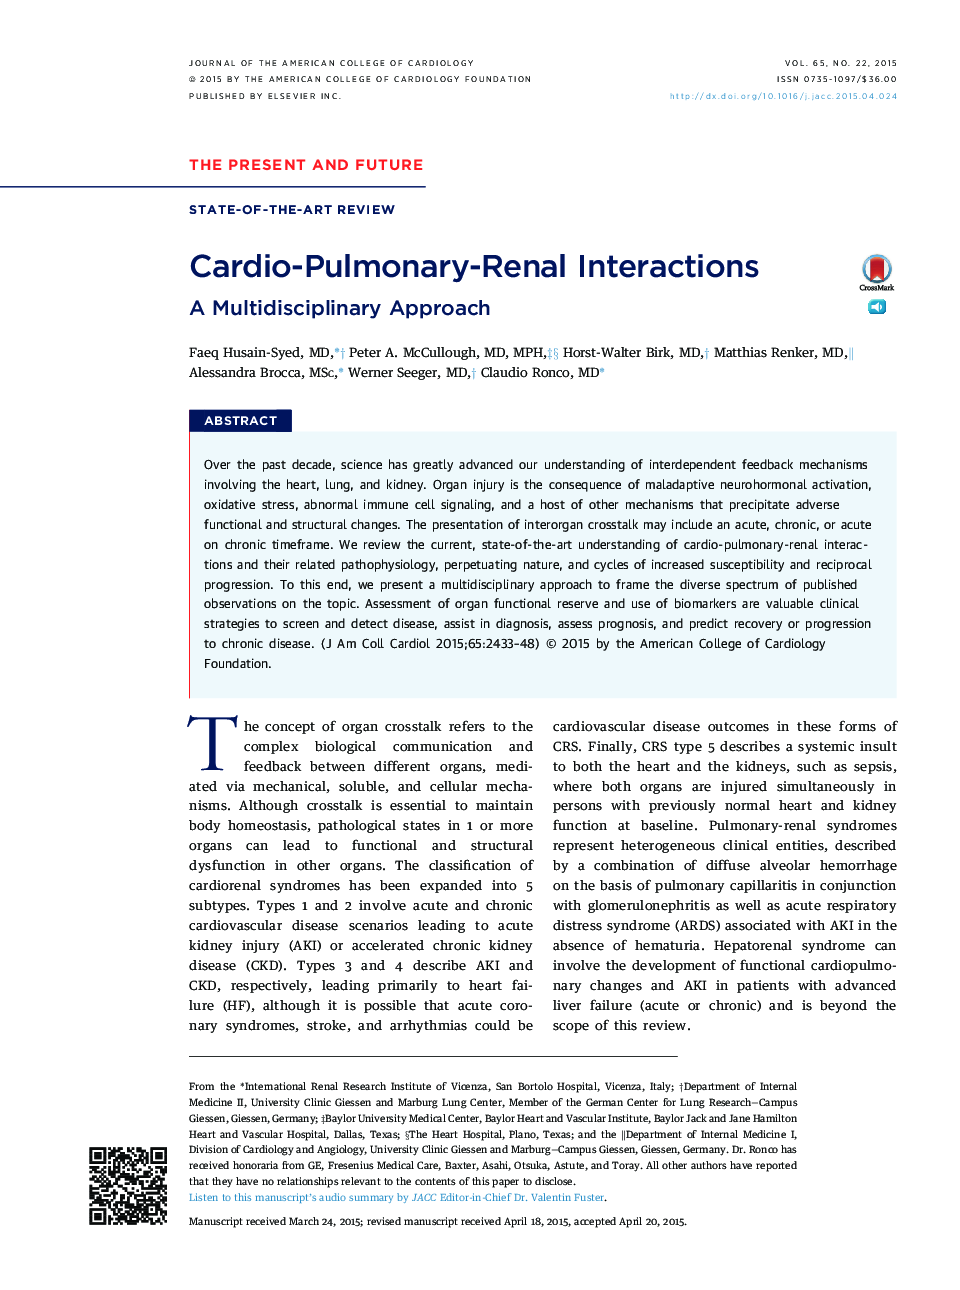 Cardio-Pulmonary-Renal Interactions: A Multidisciplinary Approach